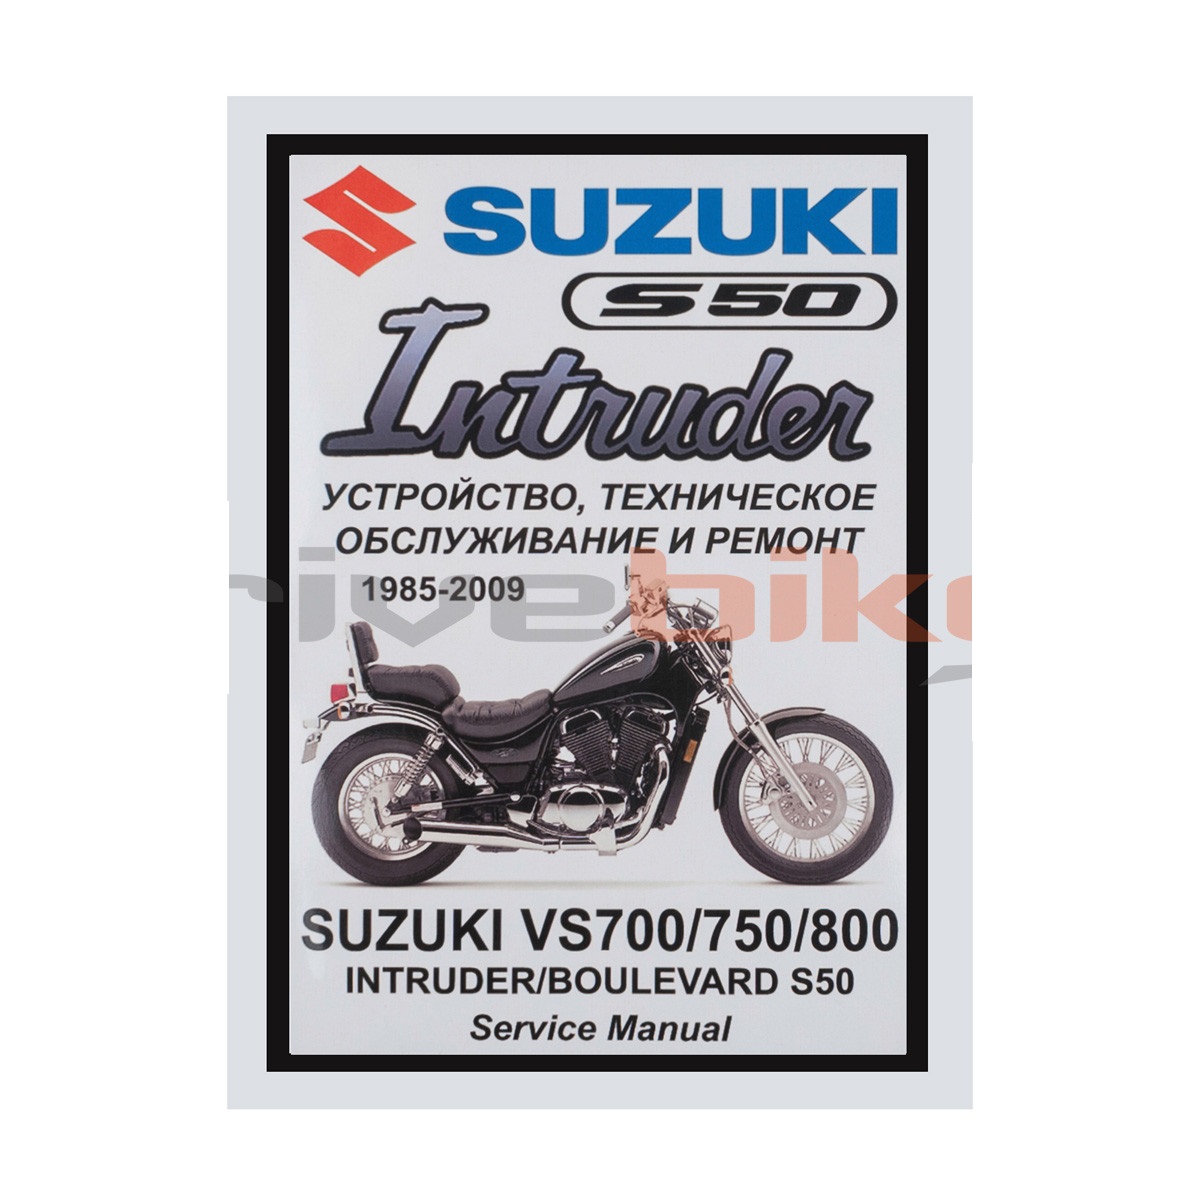 Suzuki vs1400 owner's manual